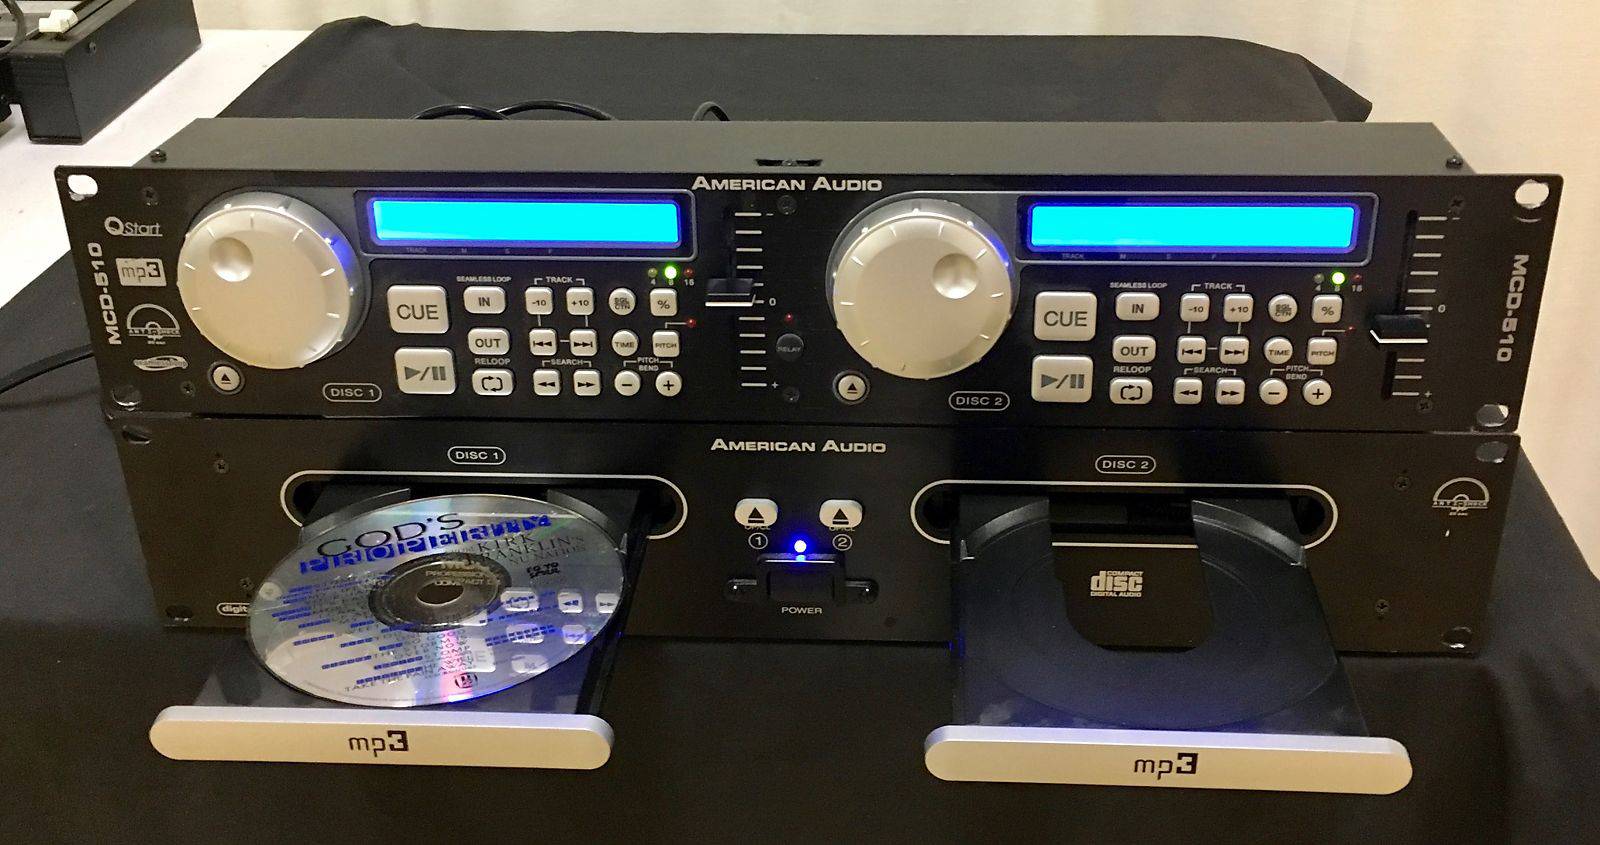 American Audio MCD-510